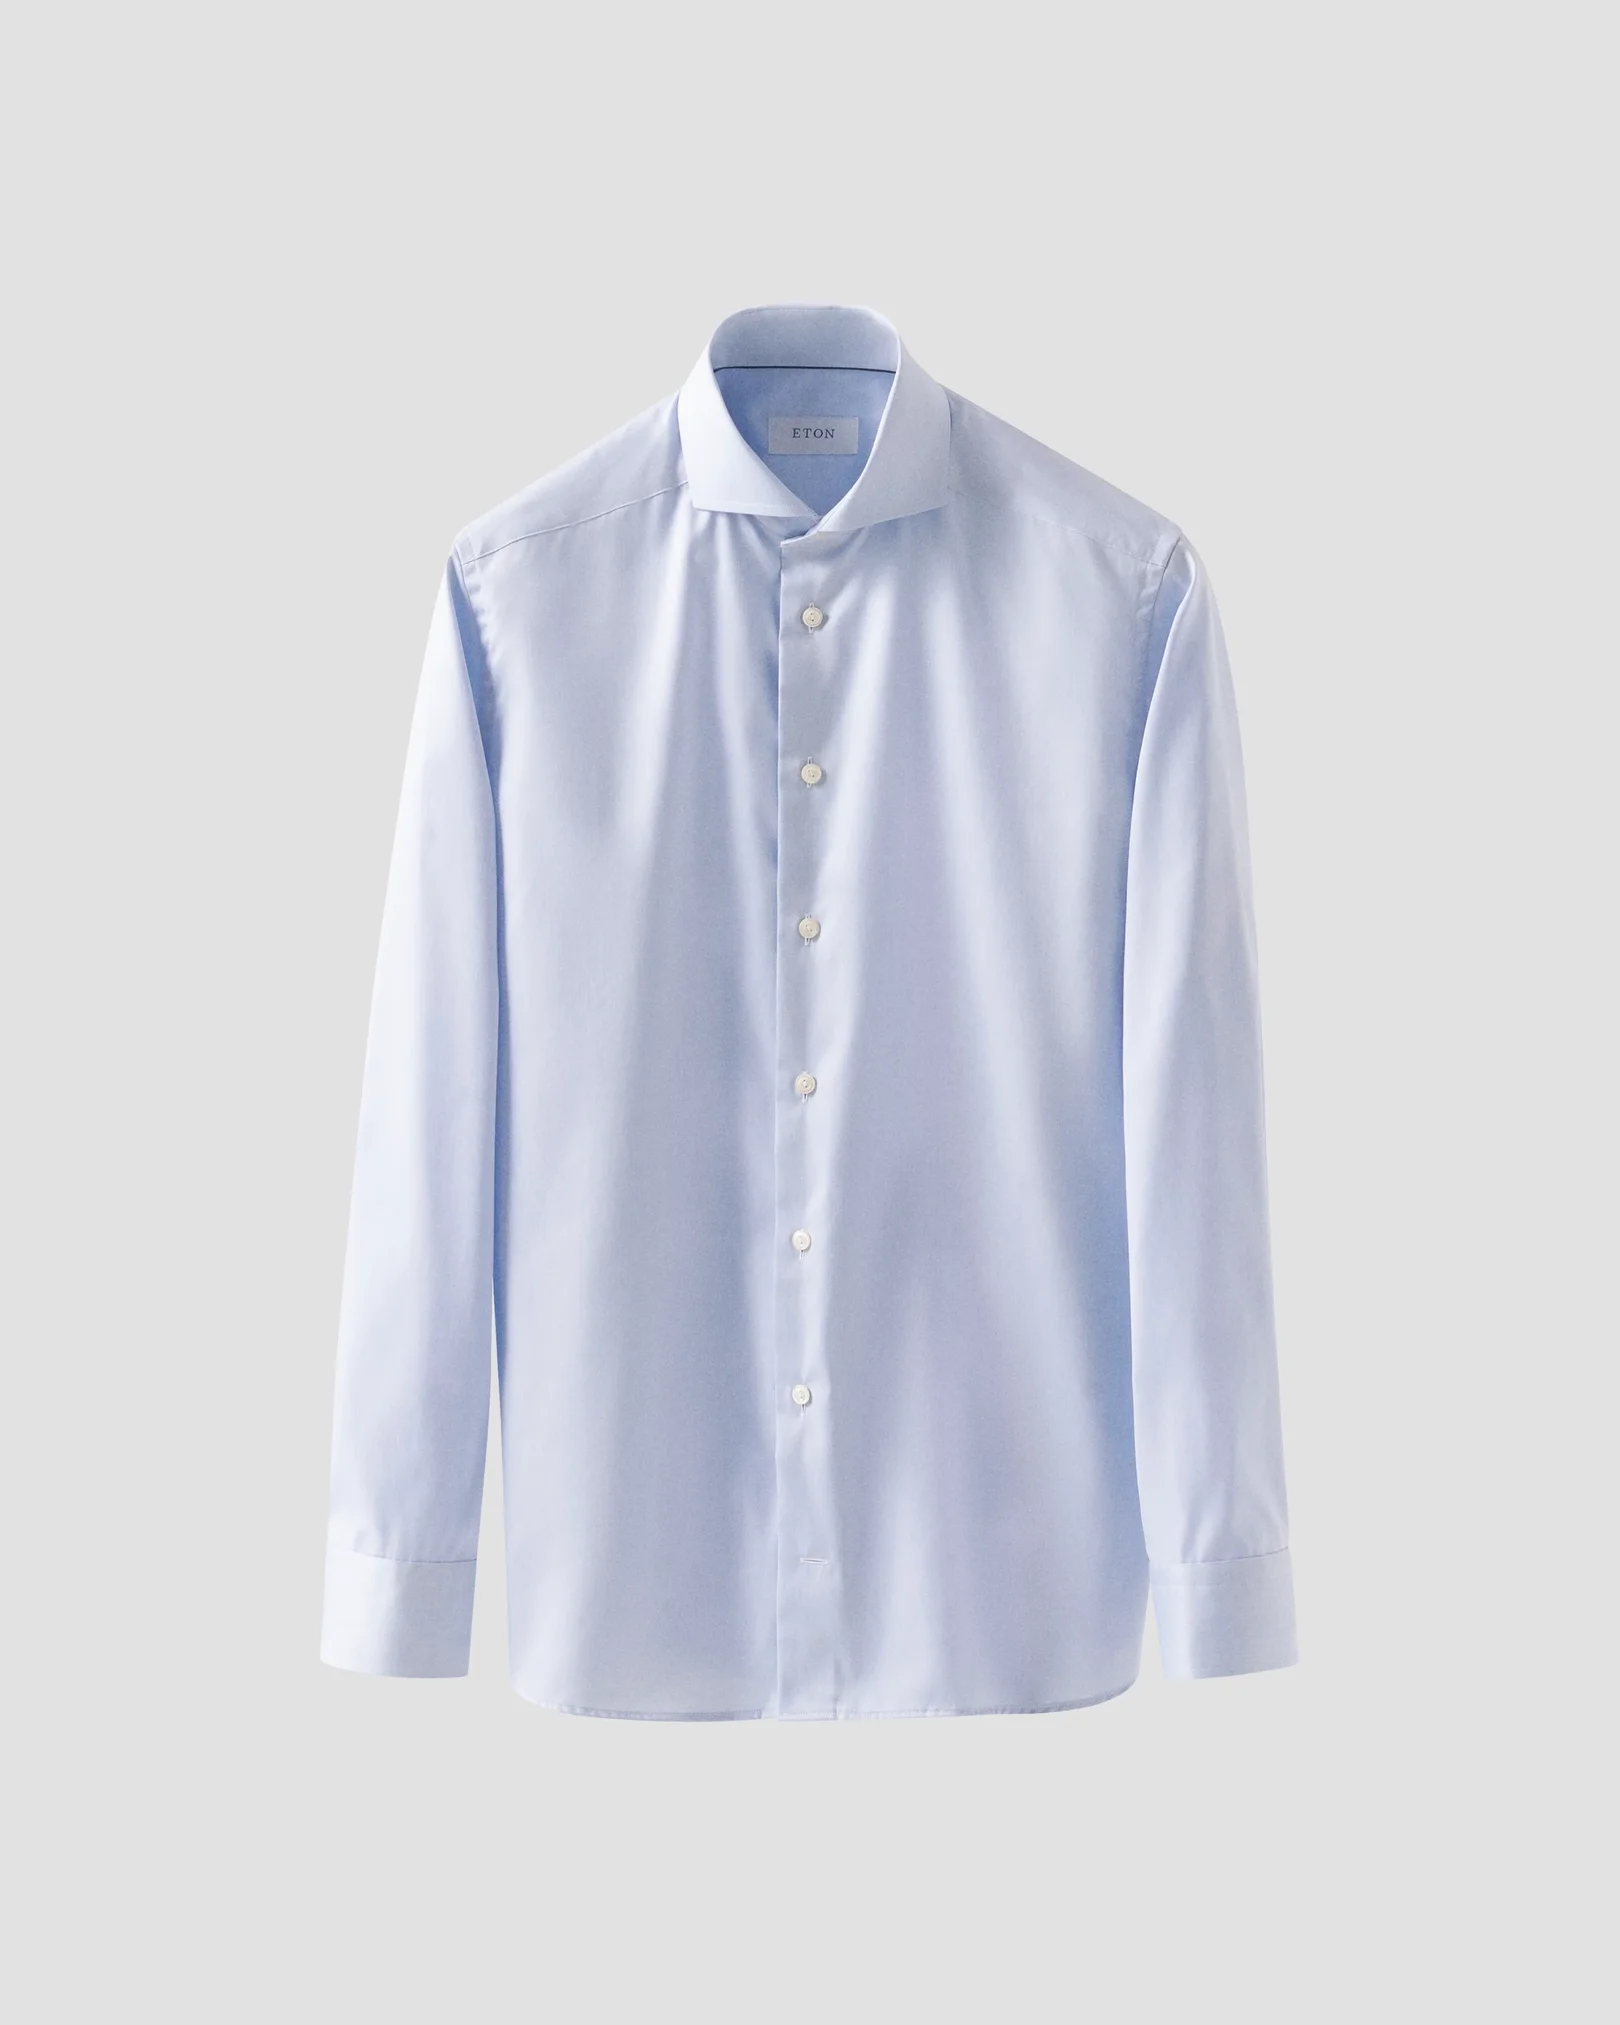 Eton - light blue shirt signature twill and extreme cut away